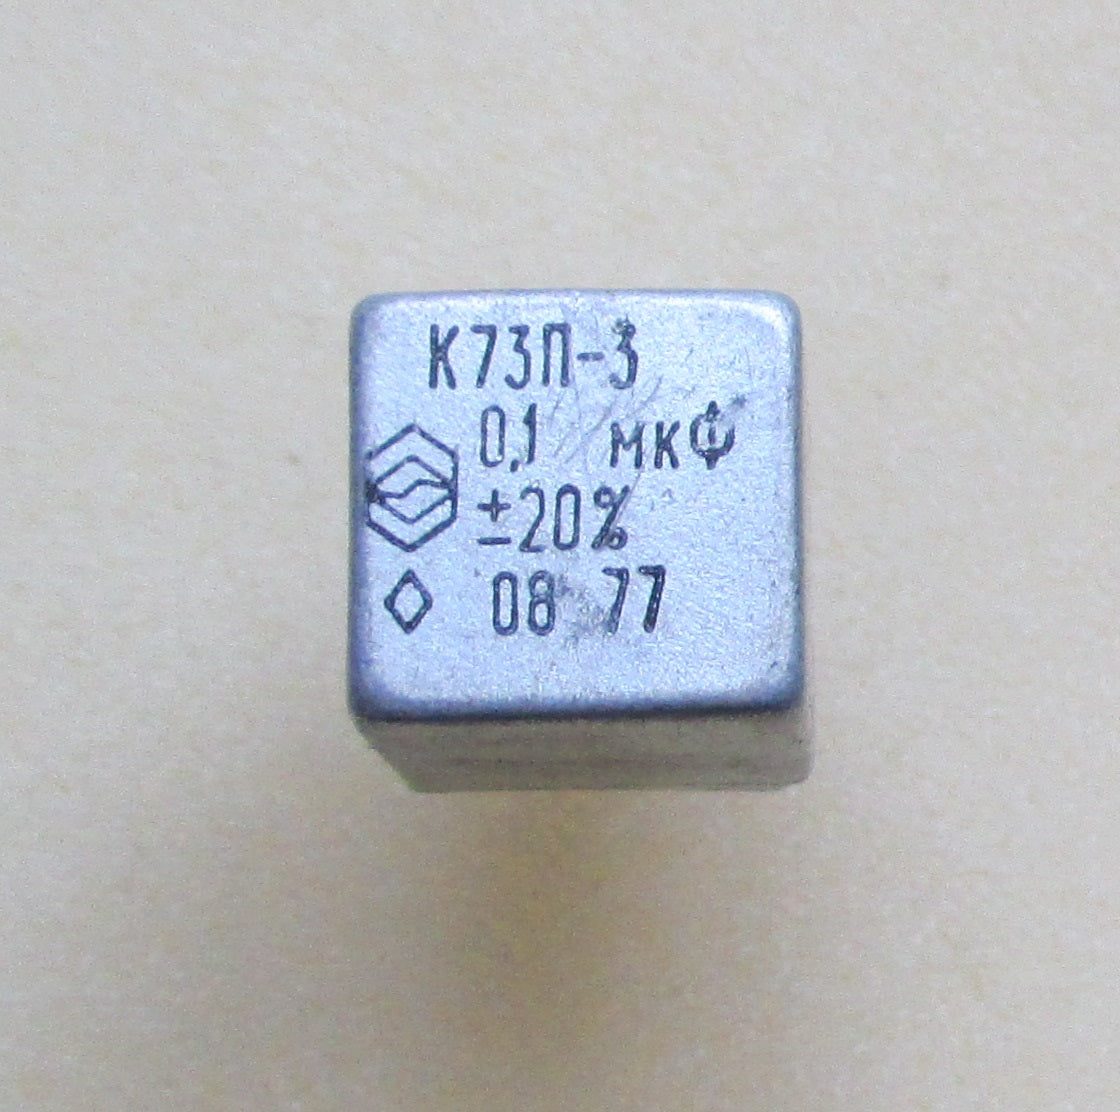 K73P-3 Polyethylene Terephthalate Capacitors